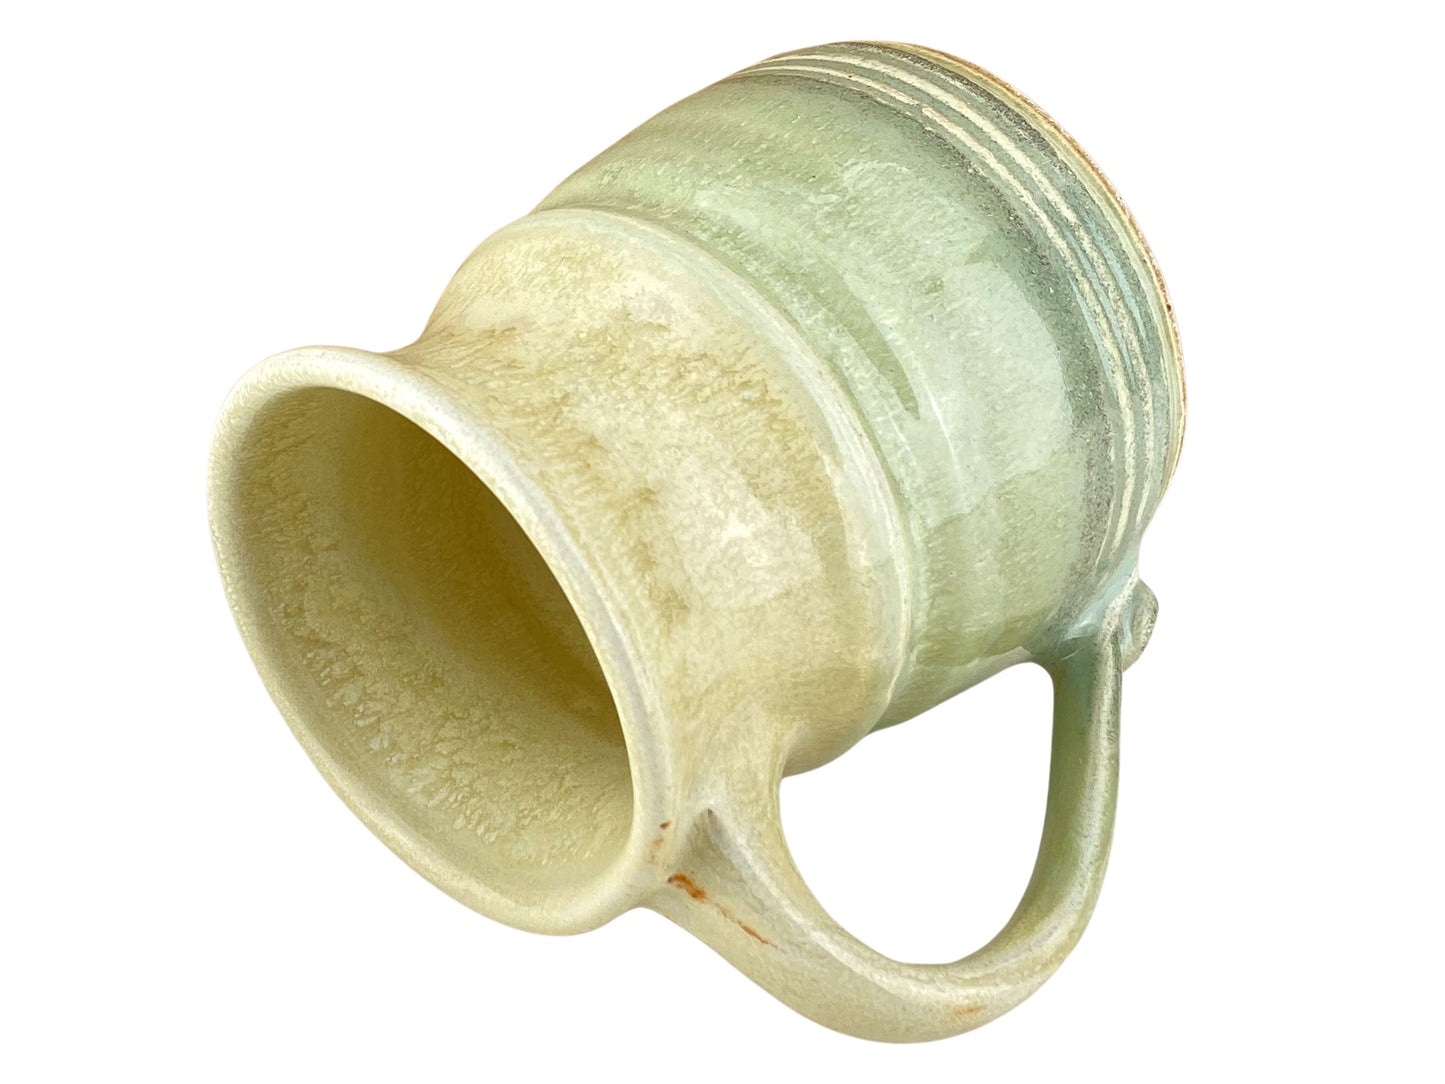 14 oz. Stoneware Mug